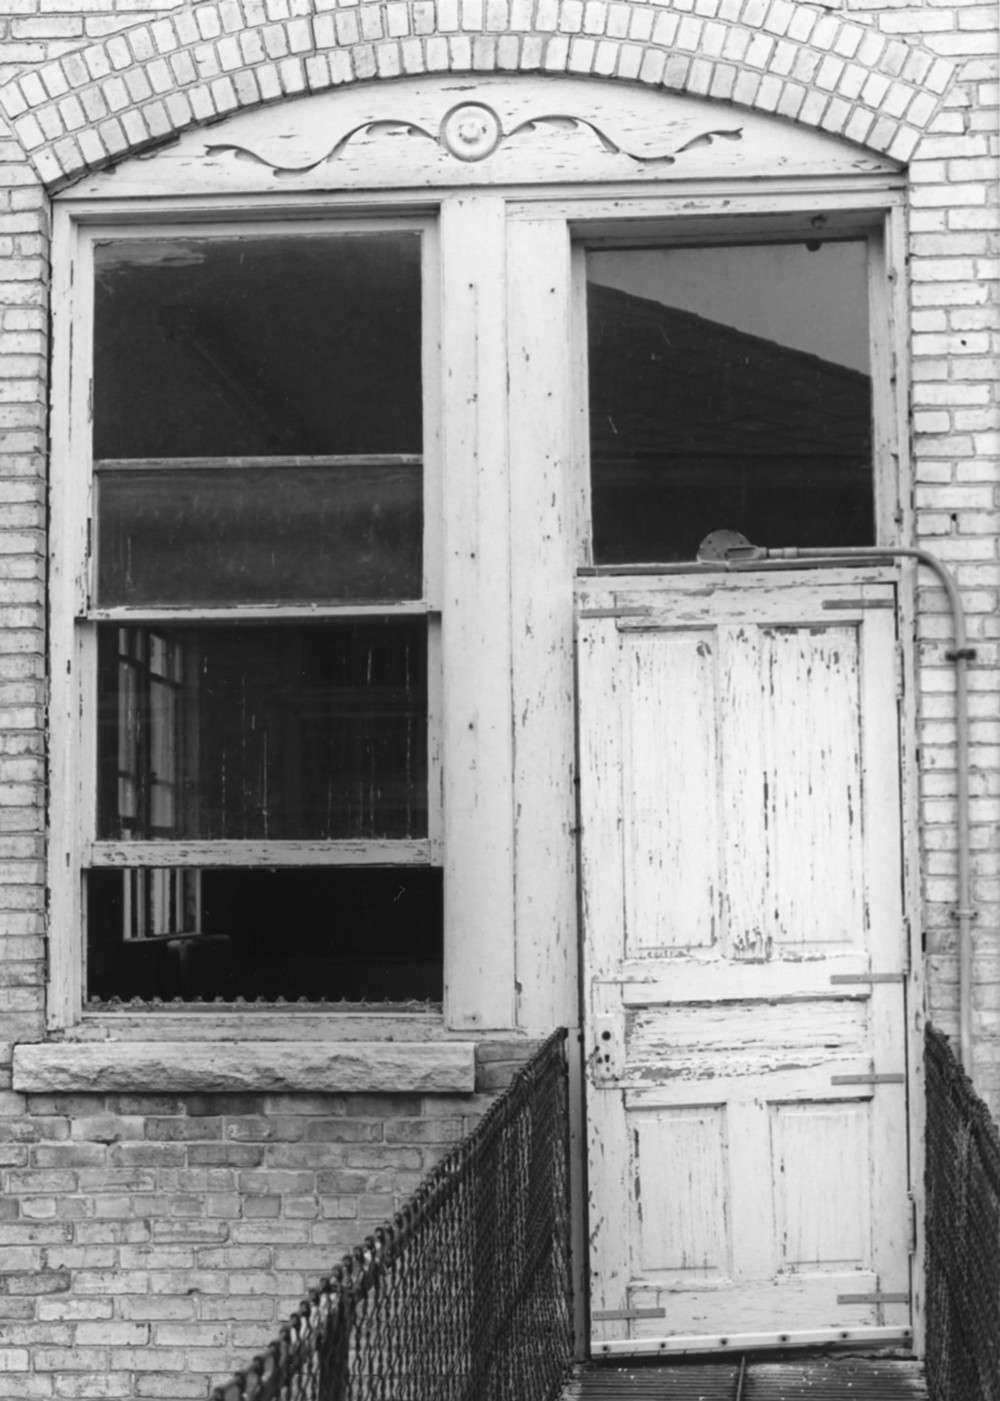 Edgerton Public Grade Schools, Edgerton Wisconsin Building l. Exterior window detail at fire escape bridge (1986)